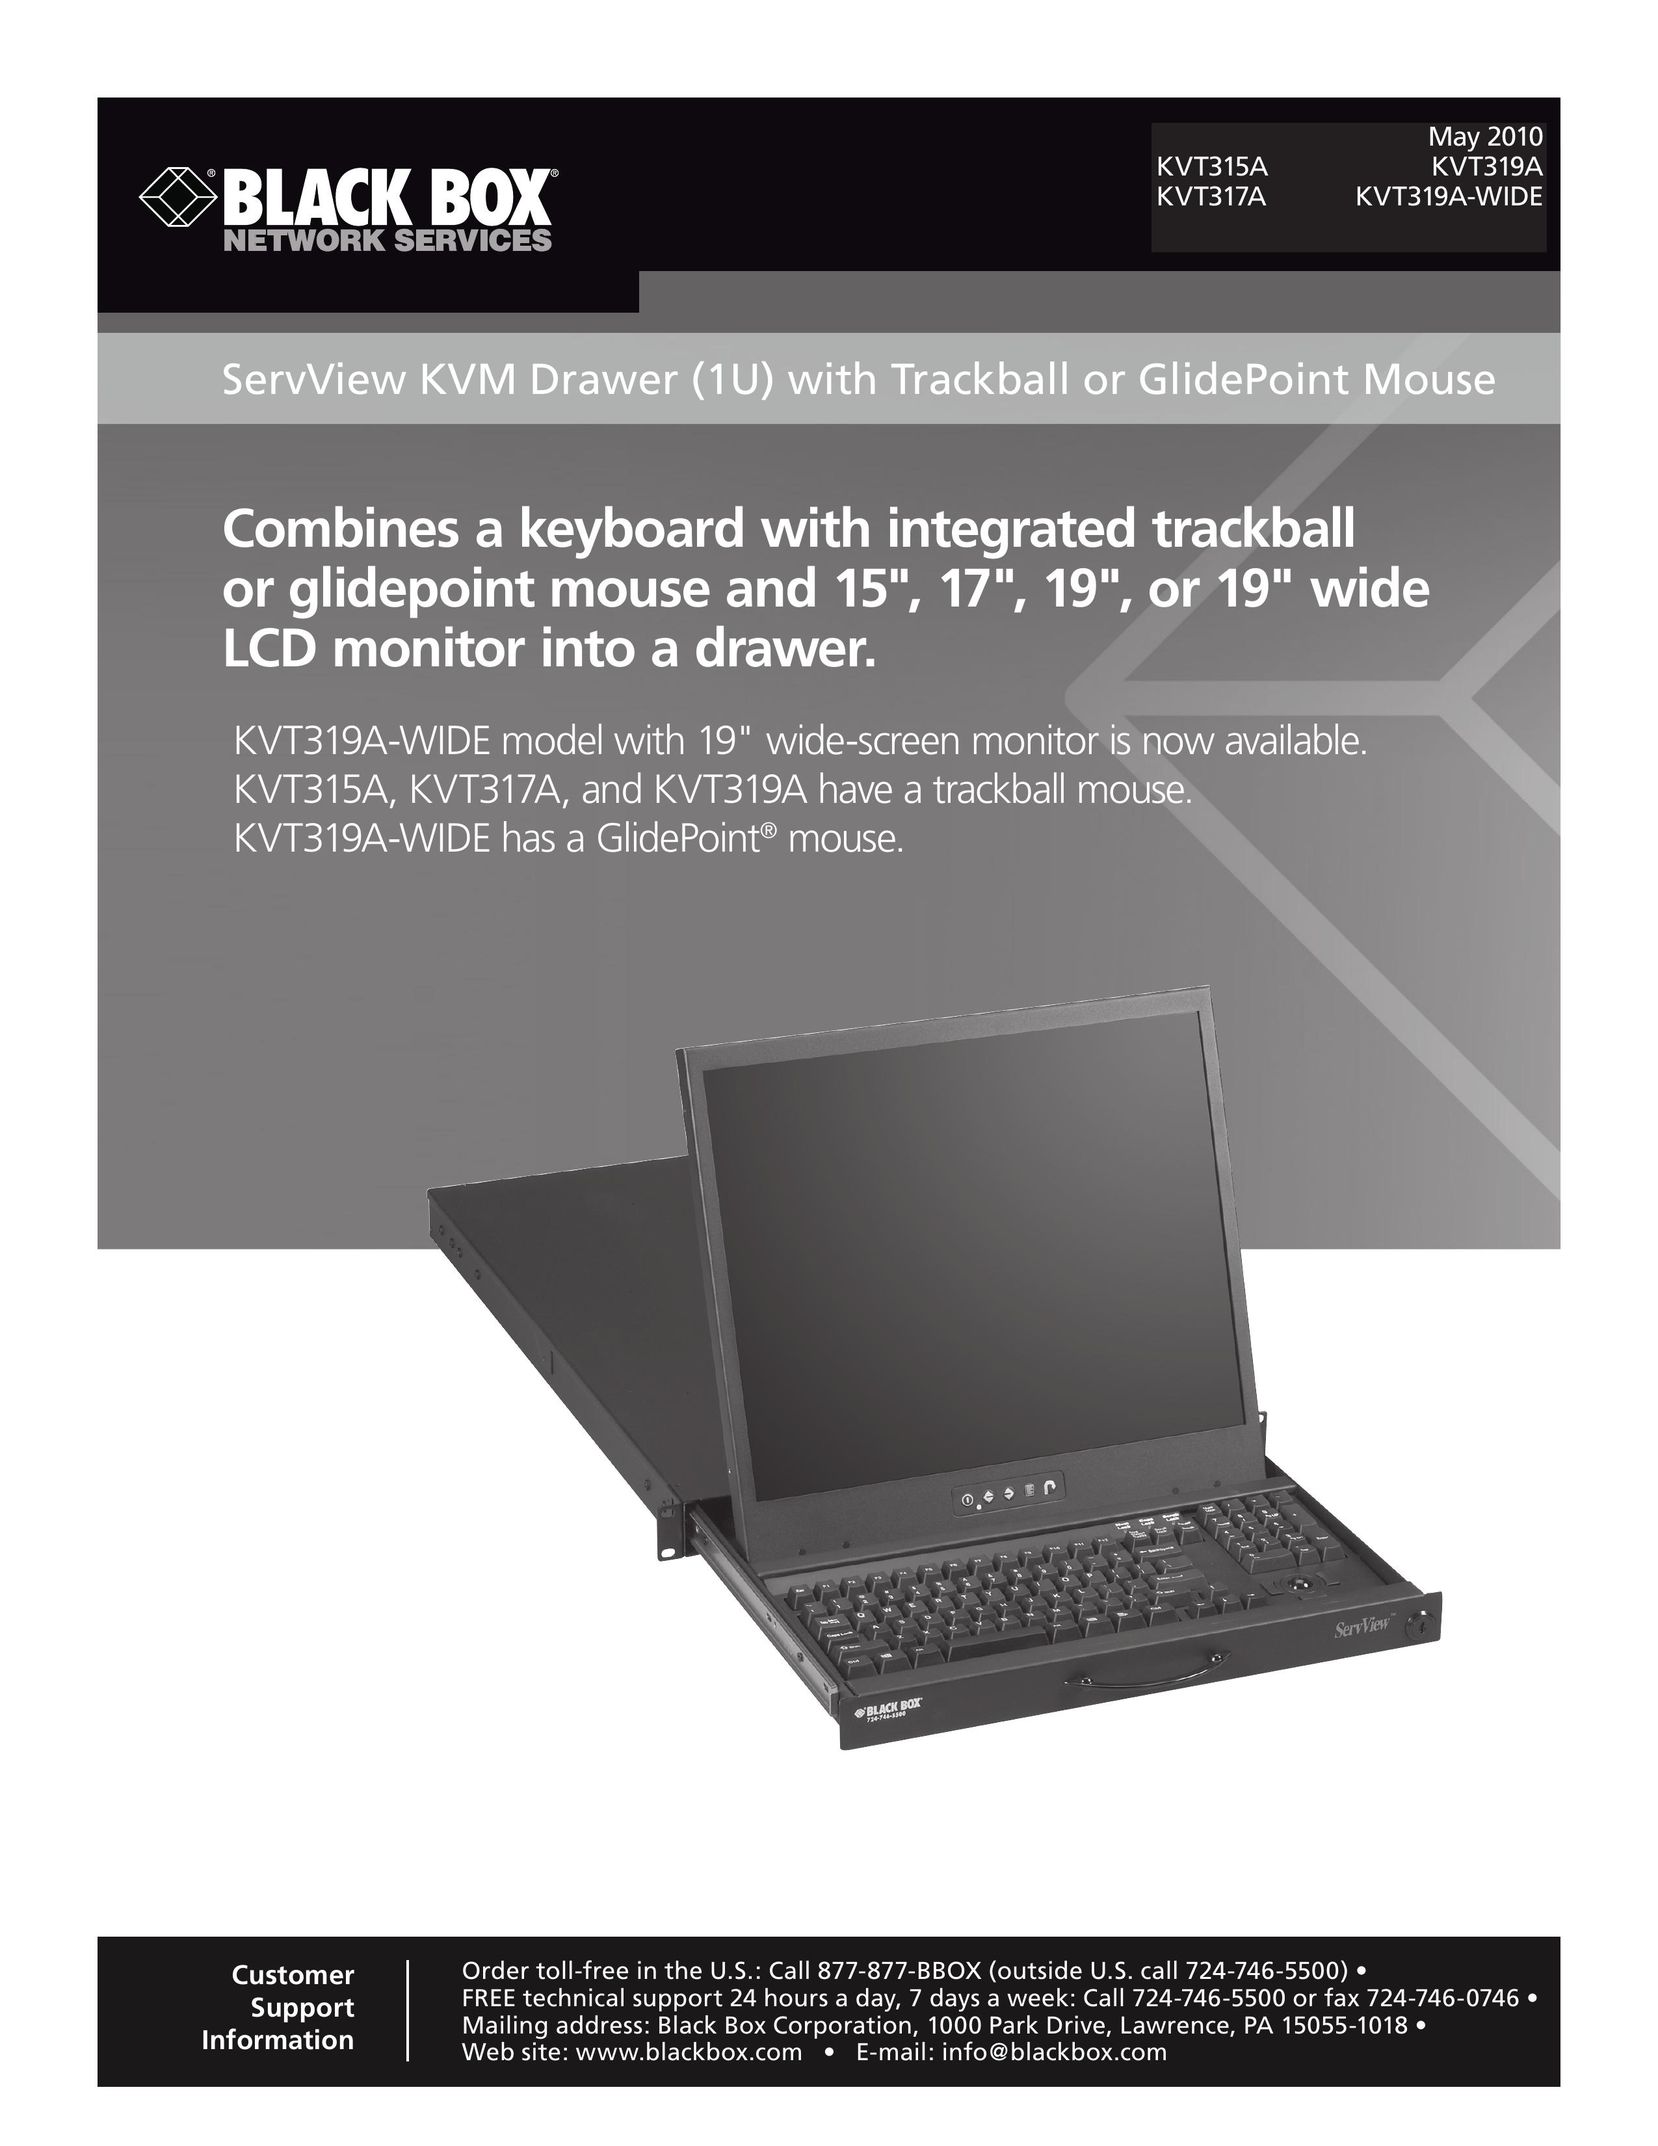 Black Box KVT319A Personal Computer User Manual